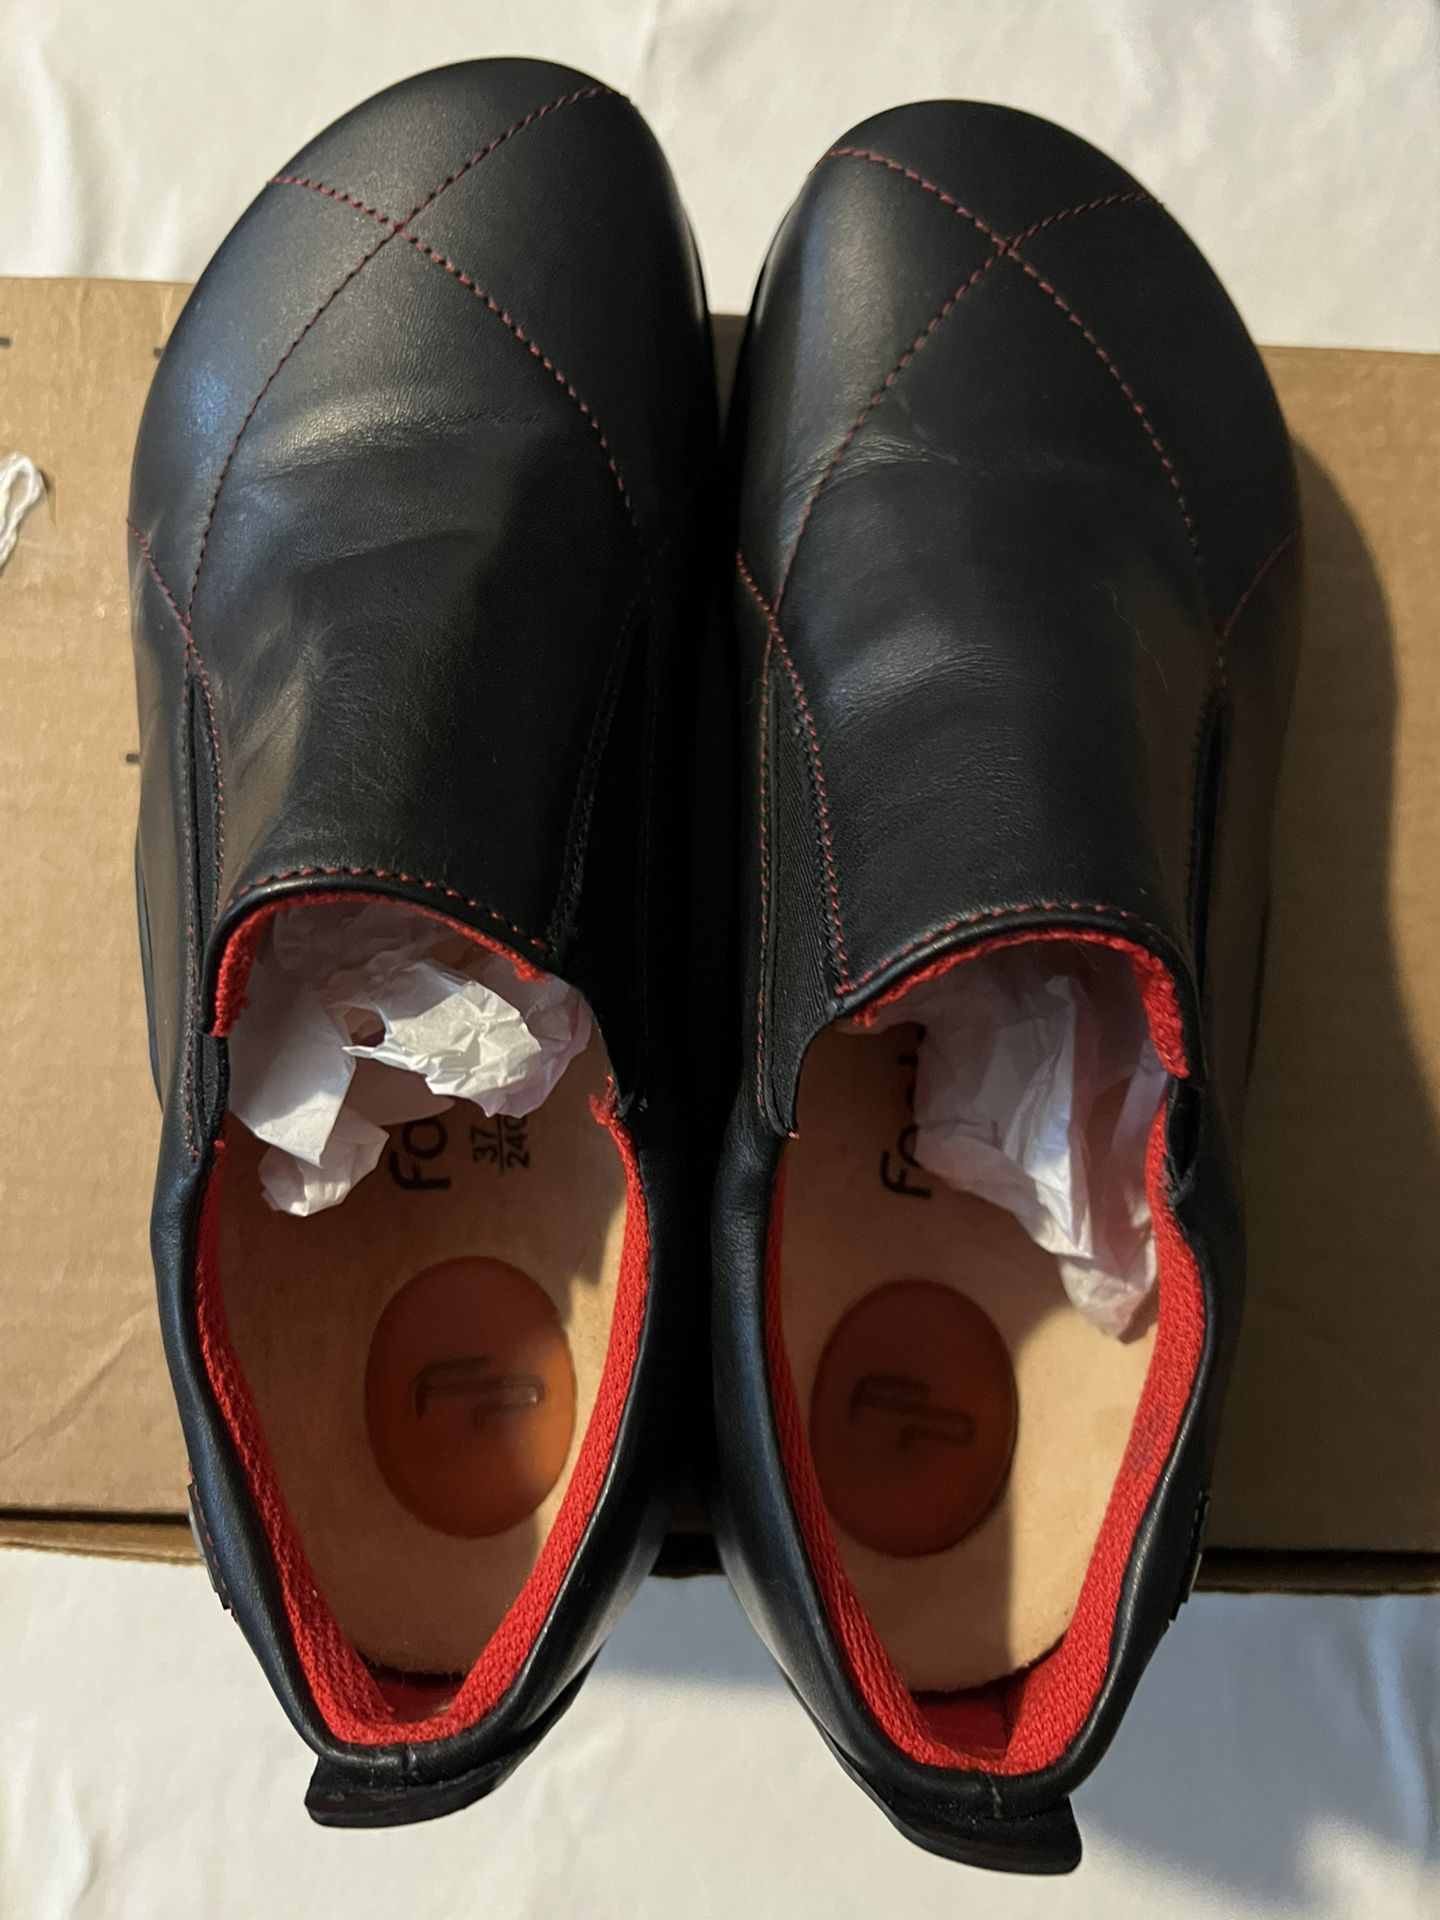 Birkenstock Footprints Slip On Shoe for Sale in Westlake, OH - OfferUp